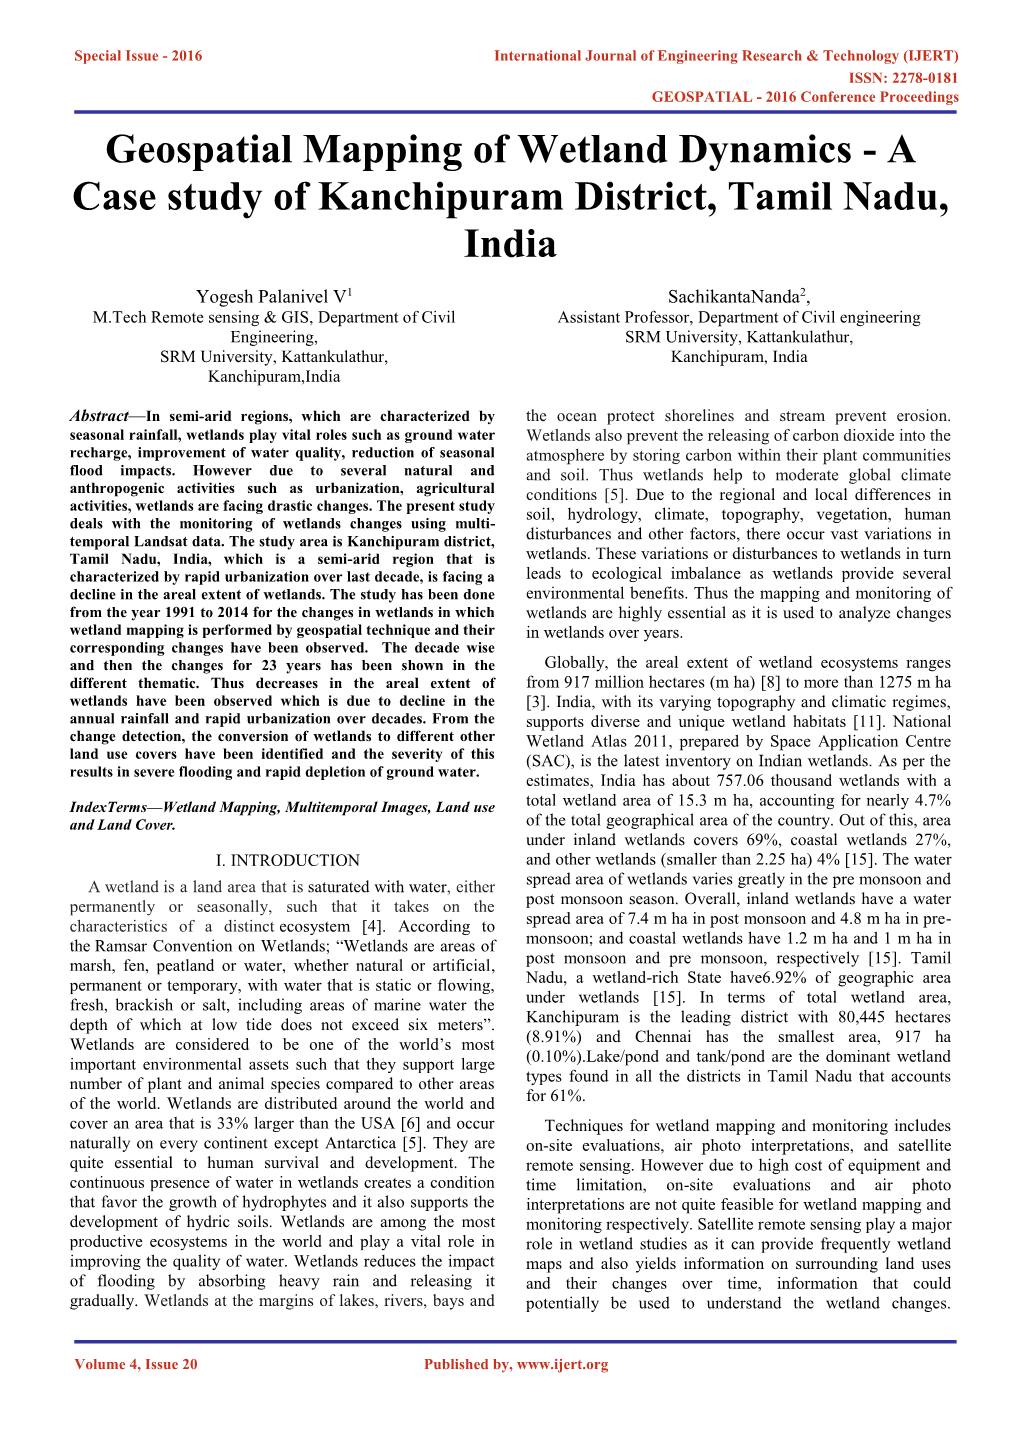 Geospatial Mapping of Wetland Dynamics - a Case Study of Kanchipuram District, Tamil Nadu, India